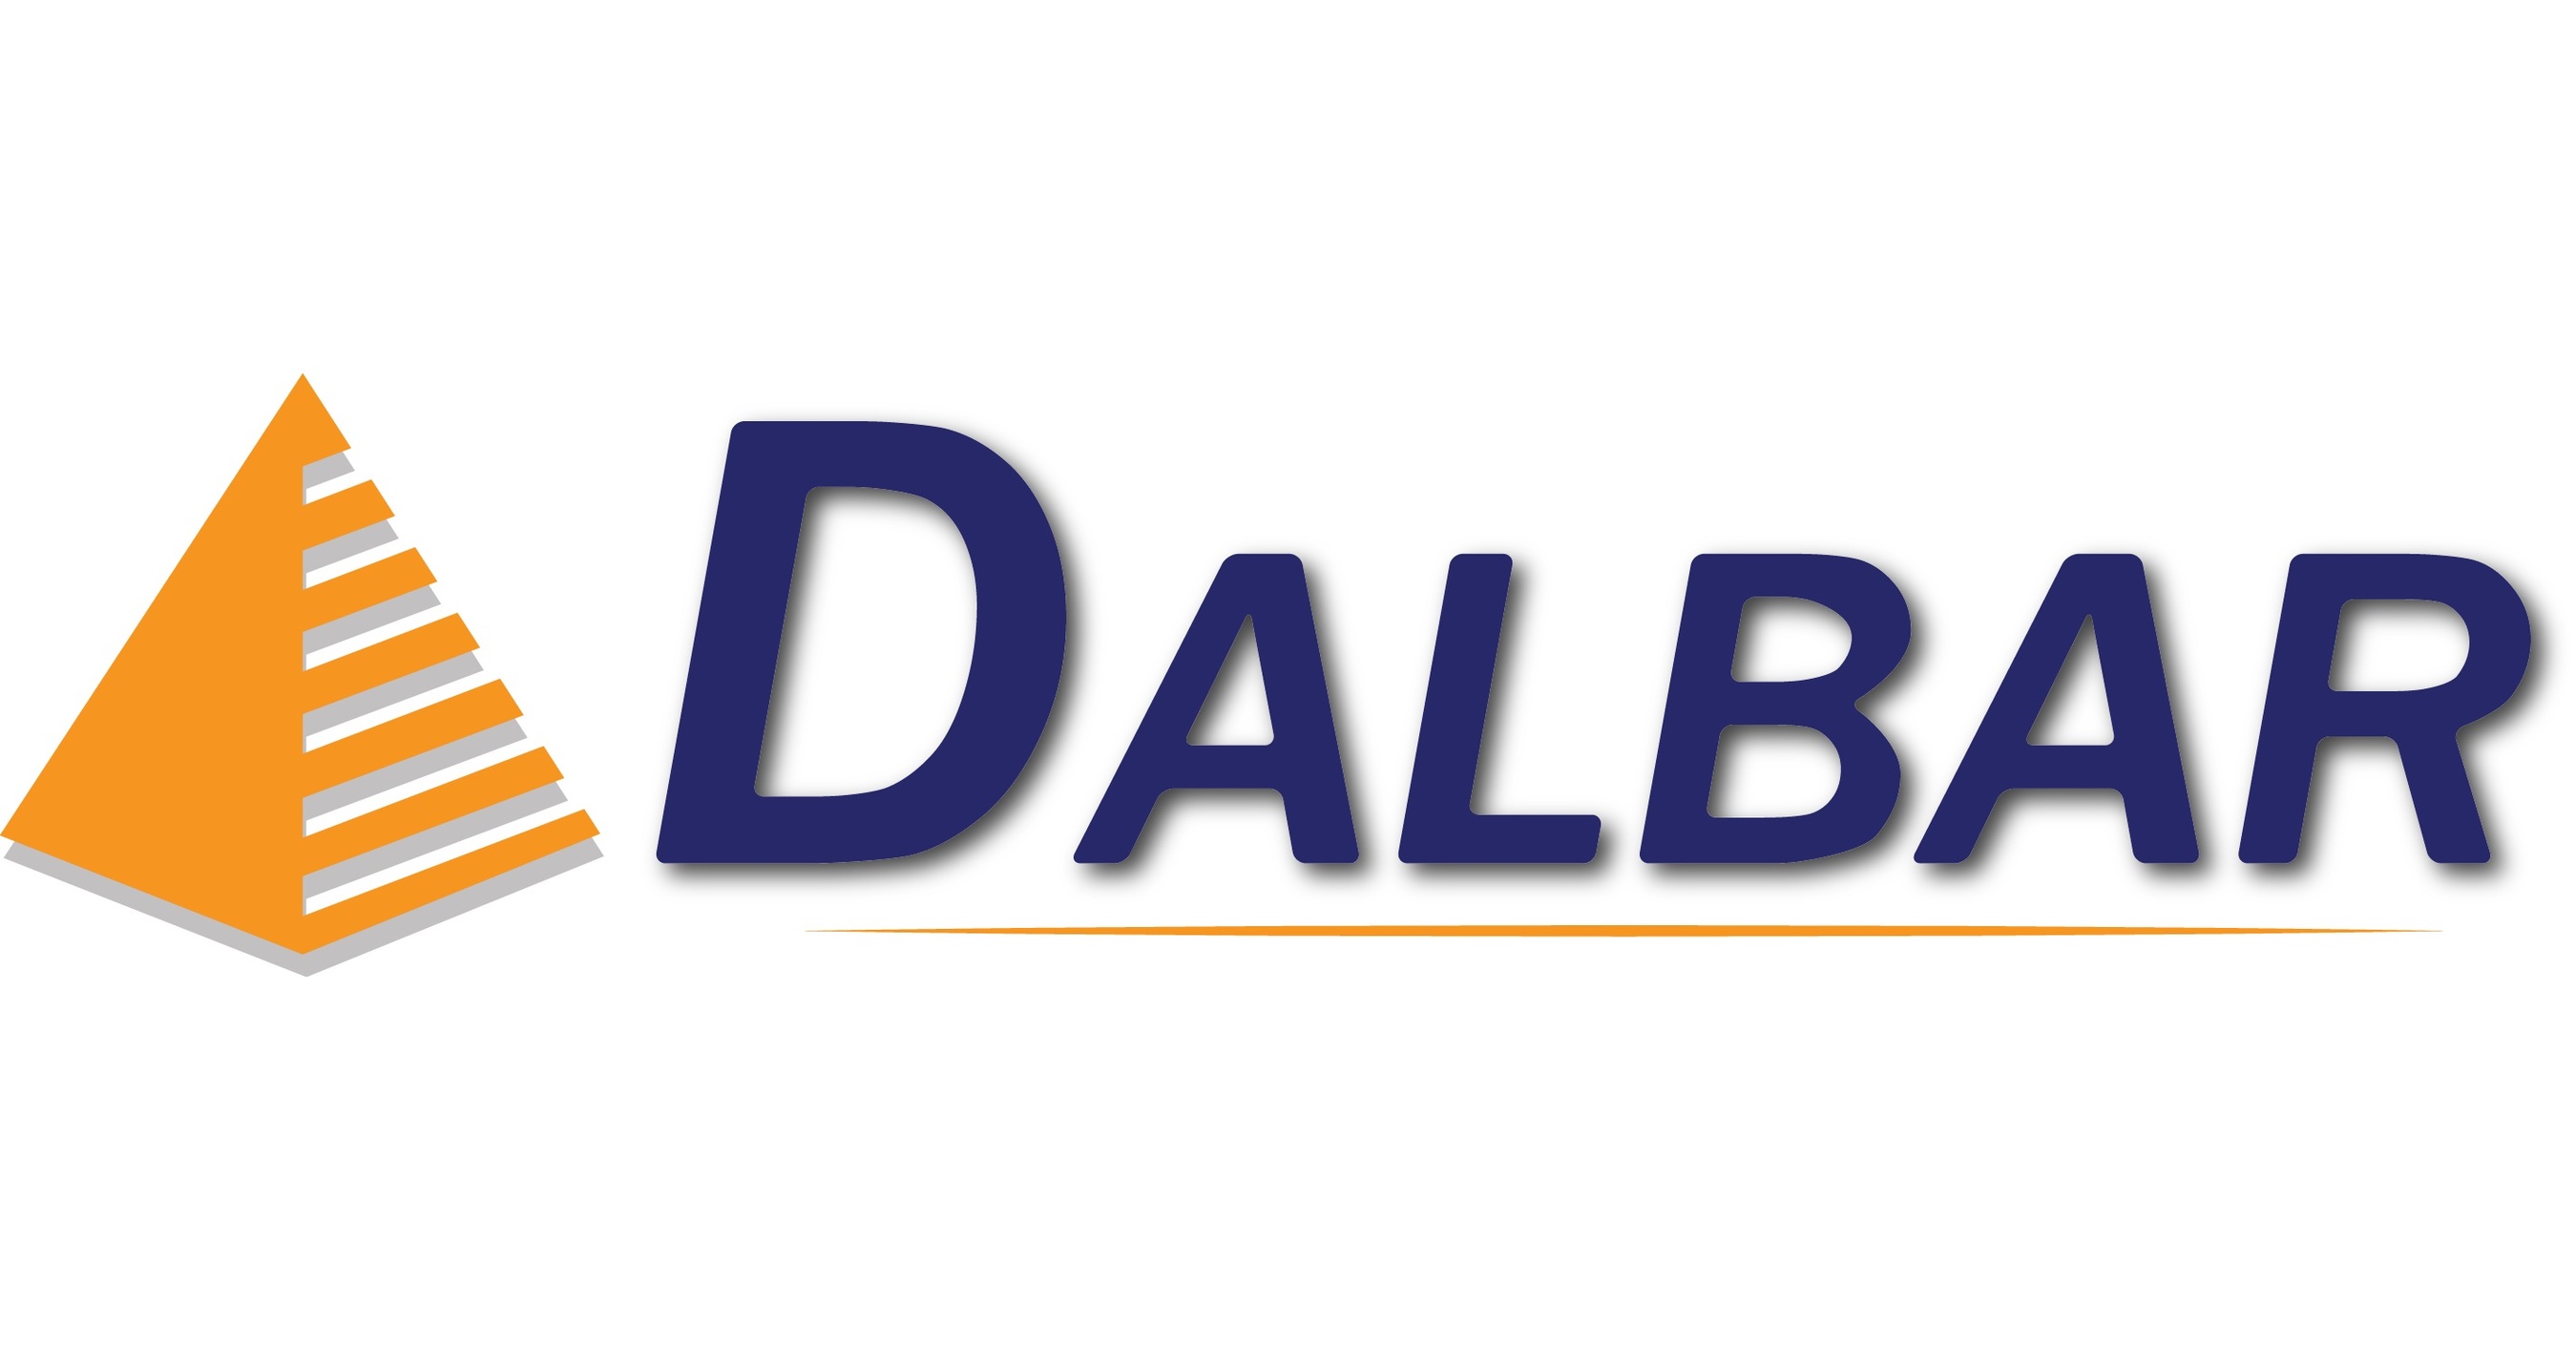 DALBAR Study finds the Average Investor Return Gap Doubled in 2021